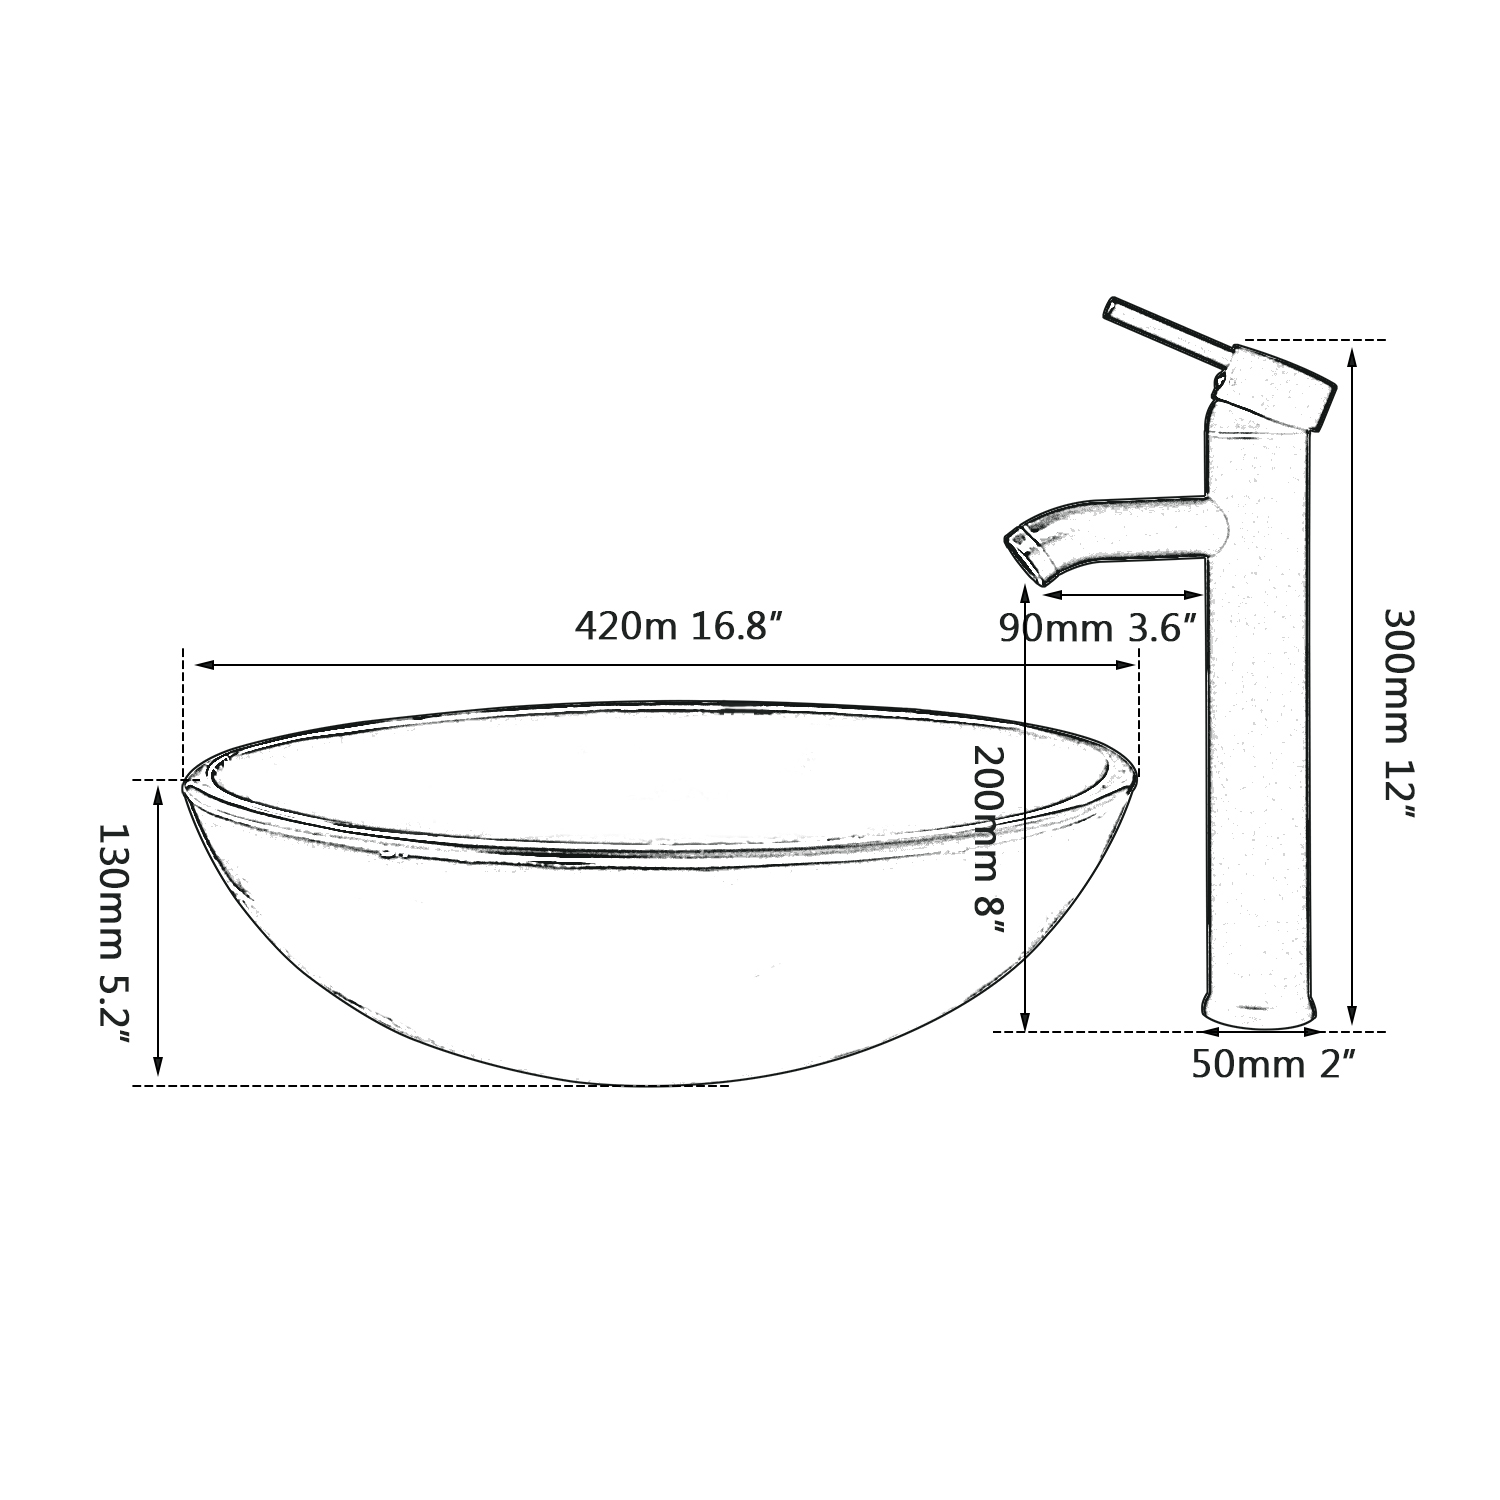 Monite Brown Ripple Bathroom Tempered Glass Basin Set Hand-Paint Lavatory Deck Mount Washbasin Sink Combine Set Mixer Tap Faucet